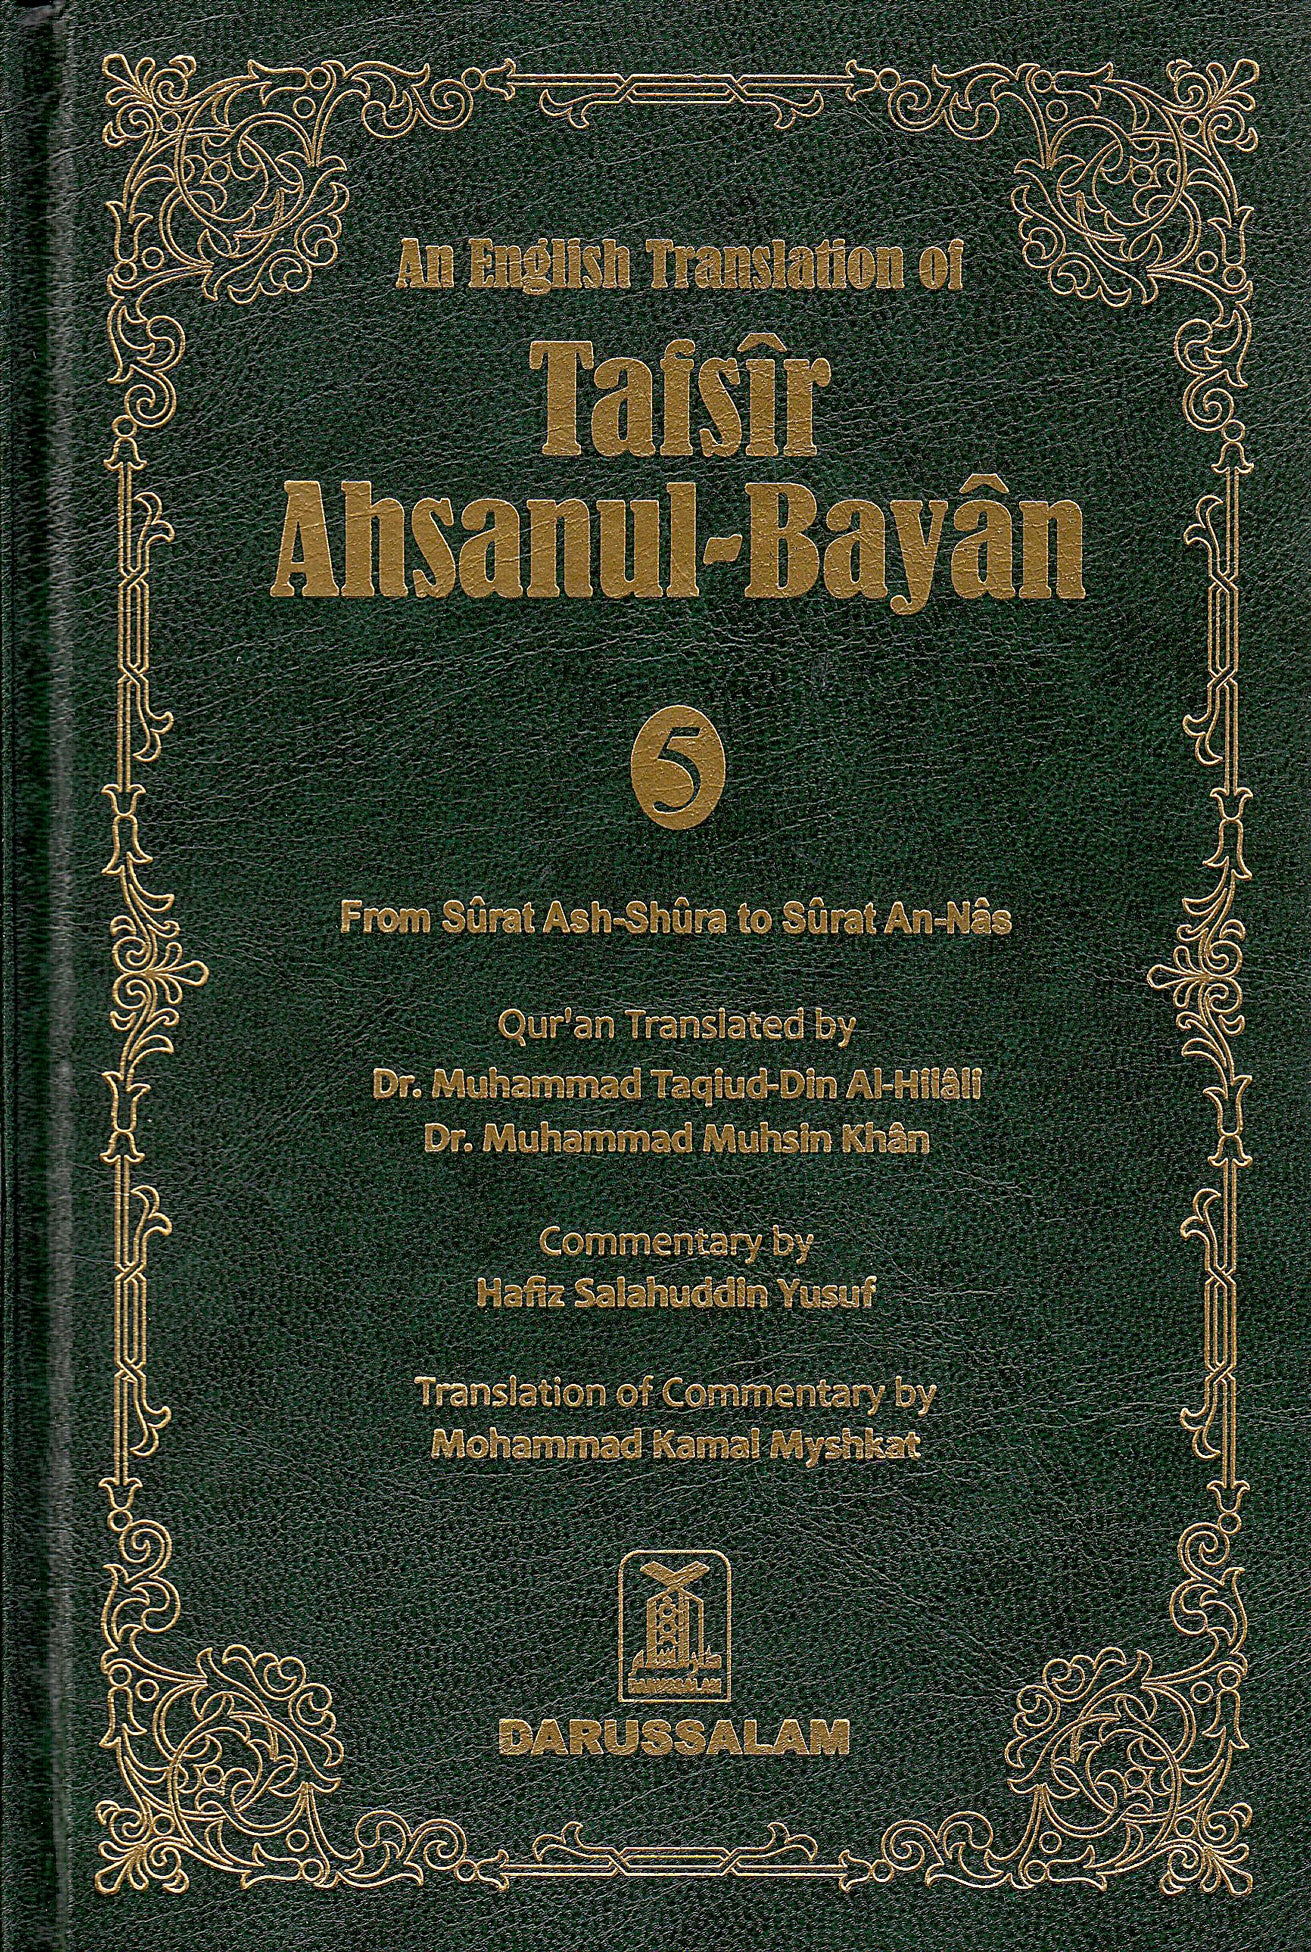 An English Translation of Tafsir Ahsanul-Bayan (Volume 5) From Ash-shura to Surat An-Nas